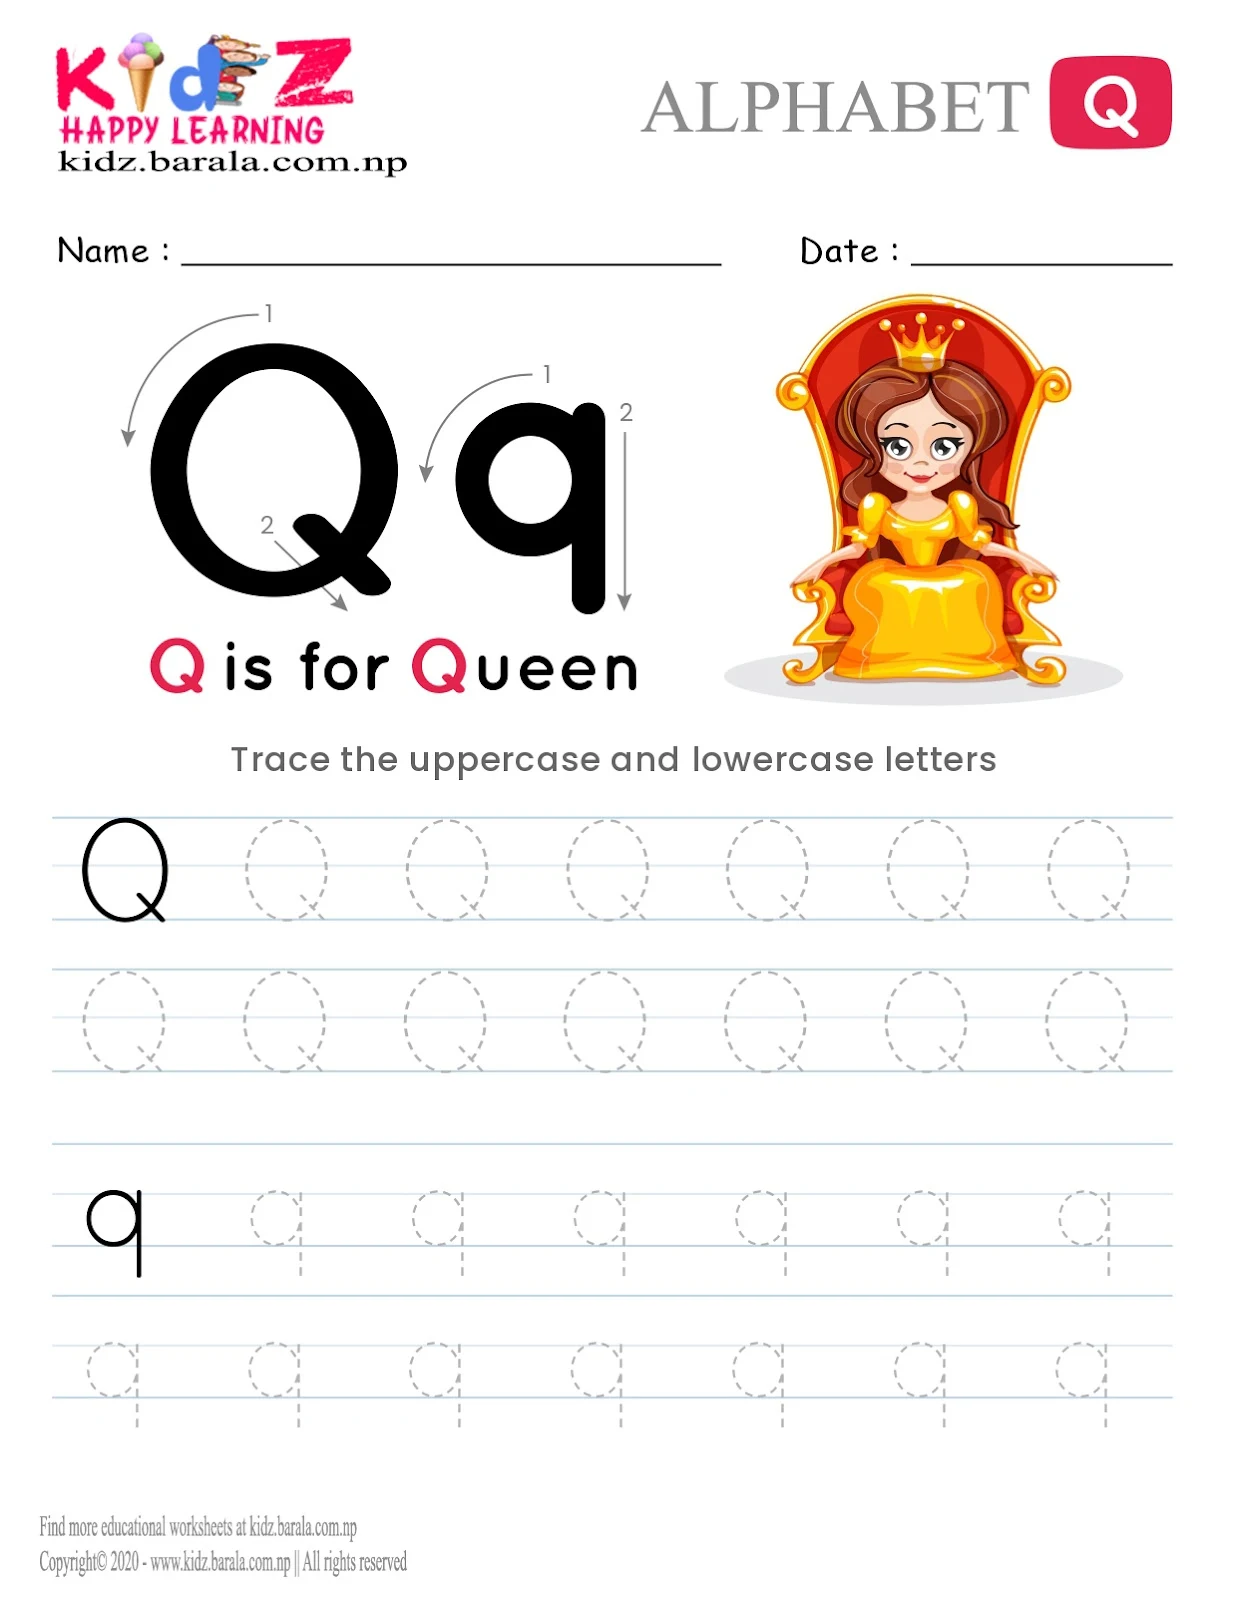 Alphabet Q tracing worksheet free download .pdf